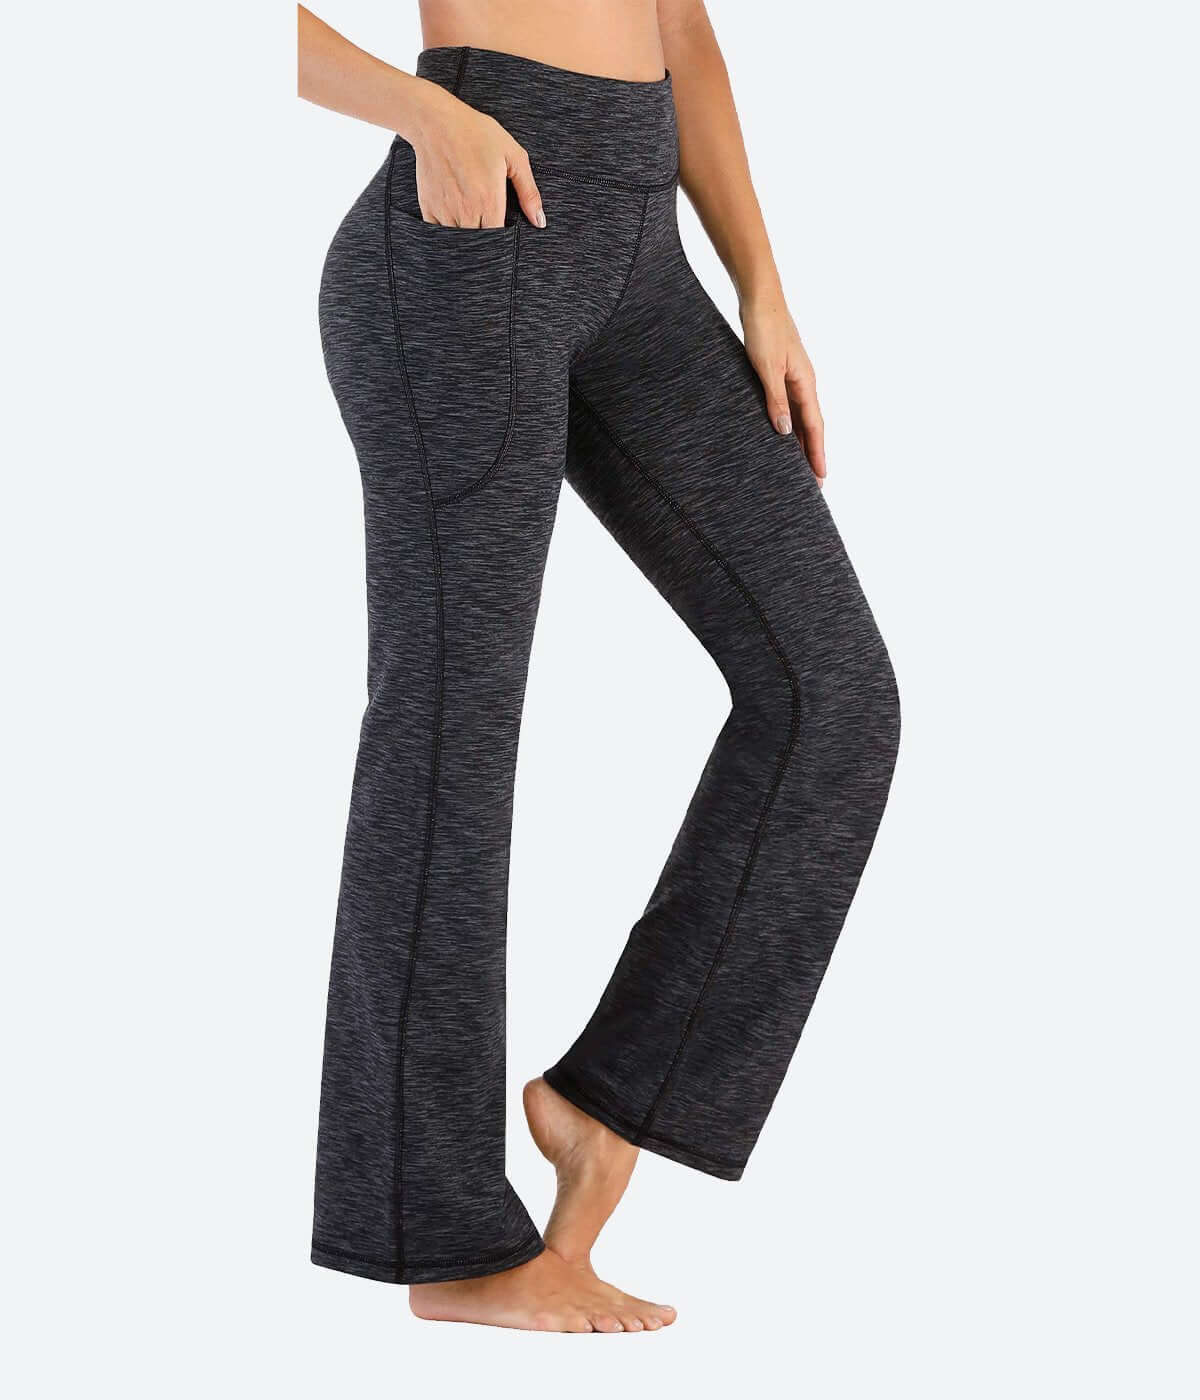  Cifupy Women's Bootcut Yoga Pants with Pockets High Waist  Workout Bootleg Pants Yoga Dress Pants 4 Way Stretch Pants Black :  Clothing, Shoes & Jewelry